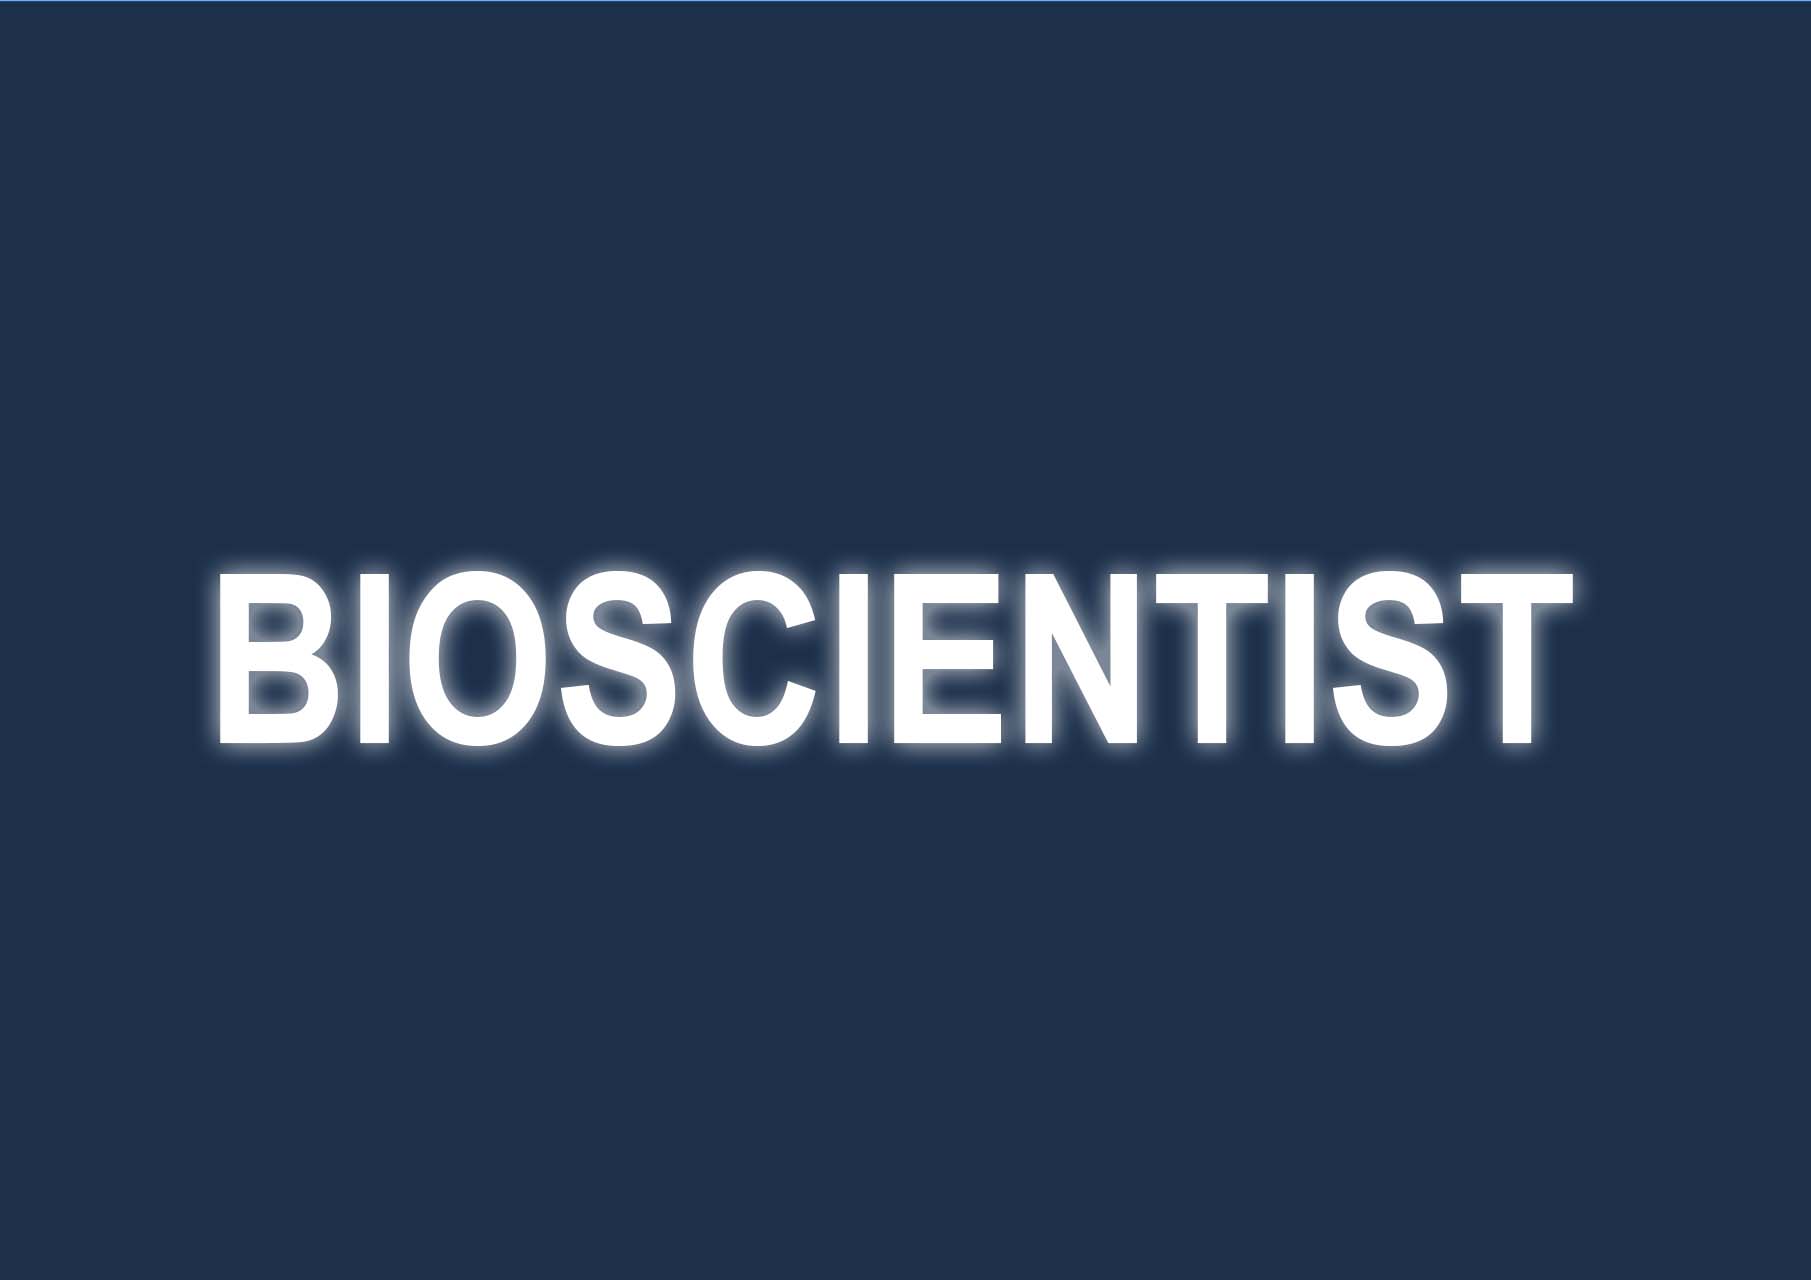 Bioscientist: The Salford Biomedicine Society Magazine's cover image.